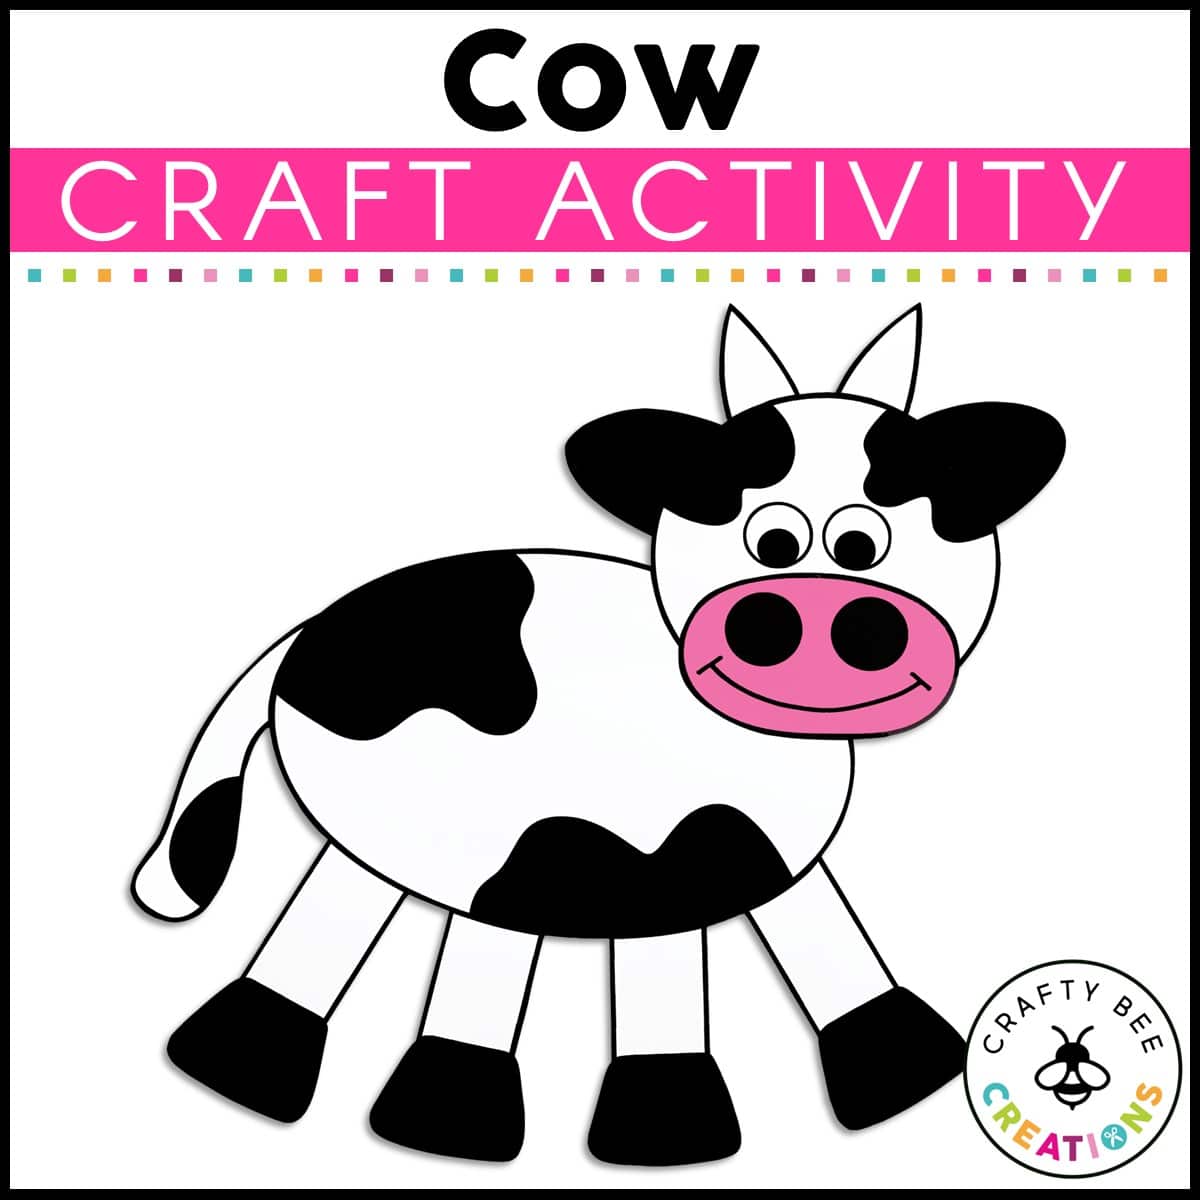 Cow craft activity